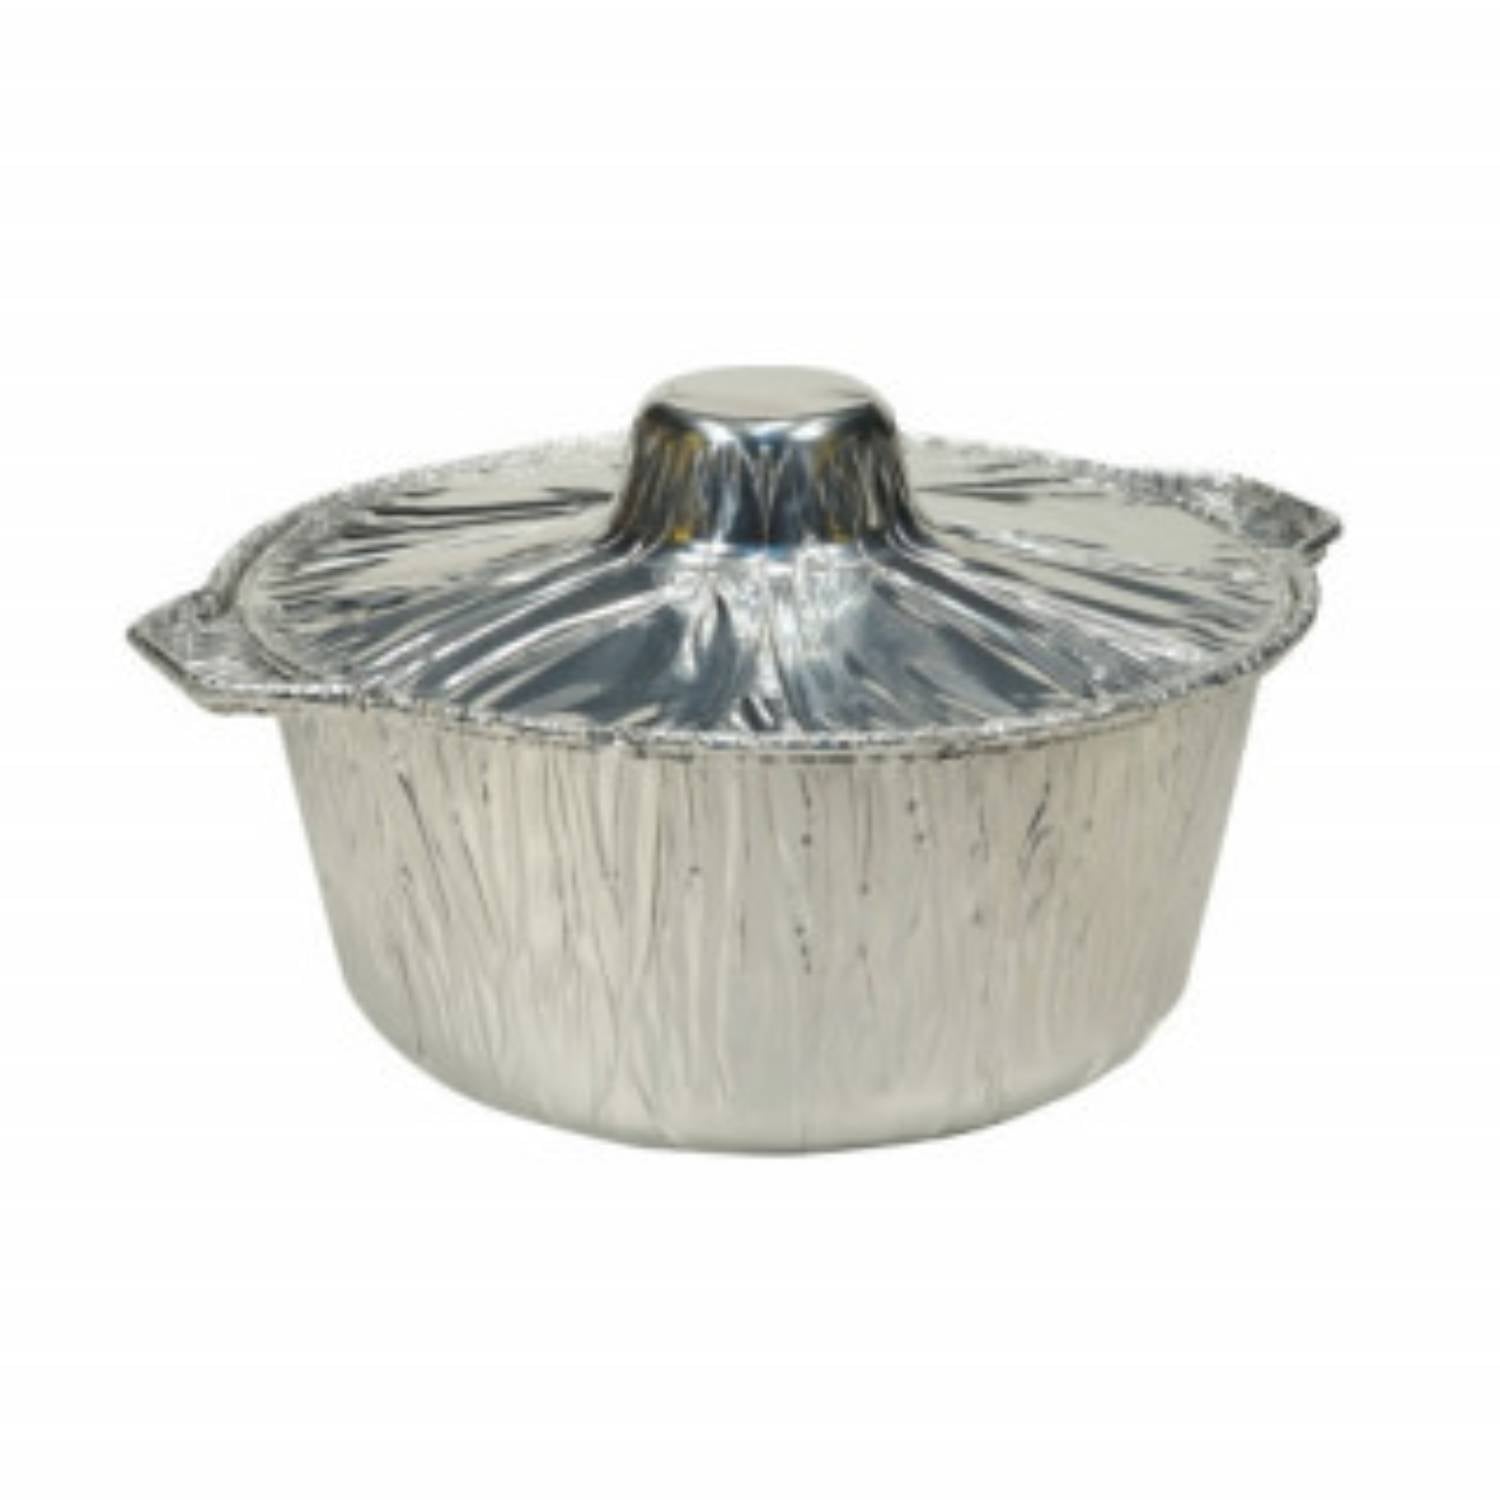 Aluminum Disposable Pots With Lids Small 3.5 Quarts Pack Of 6